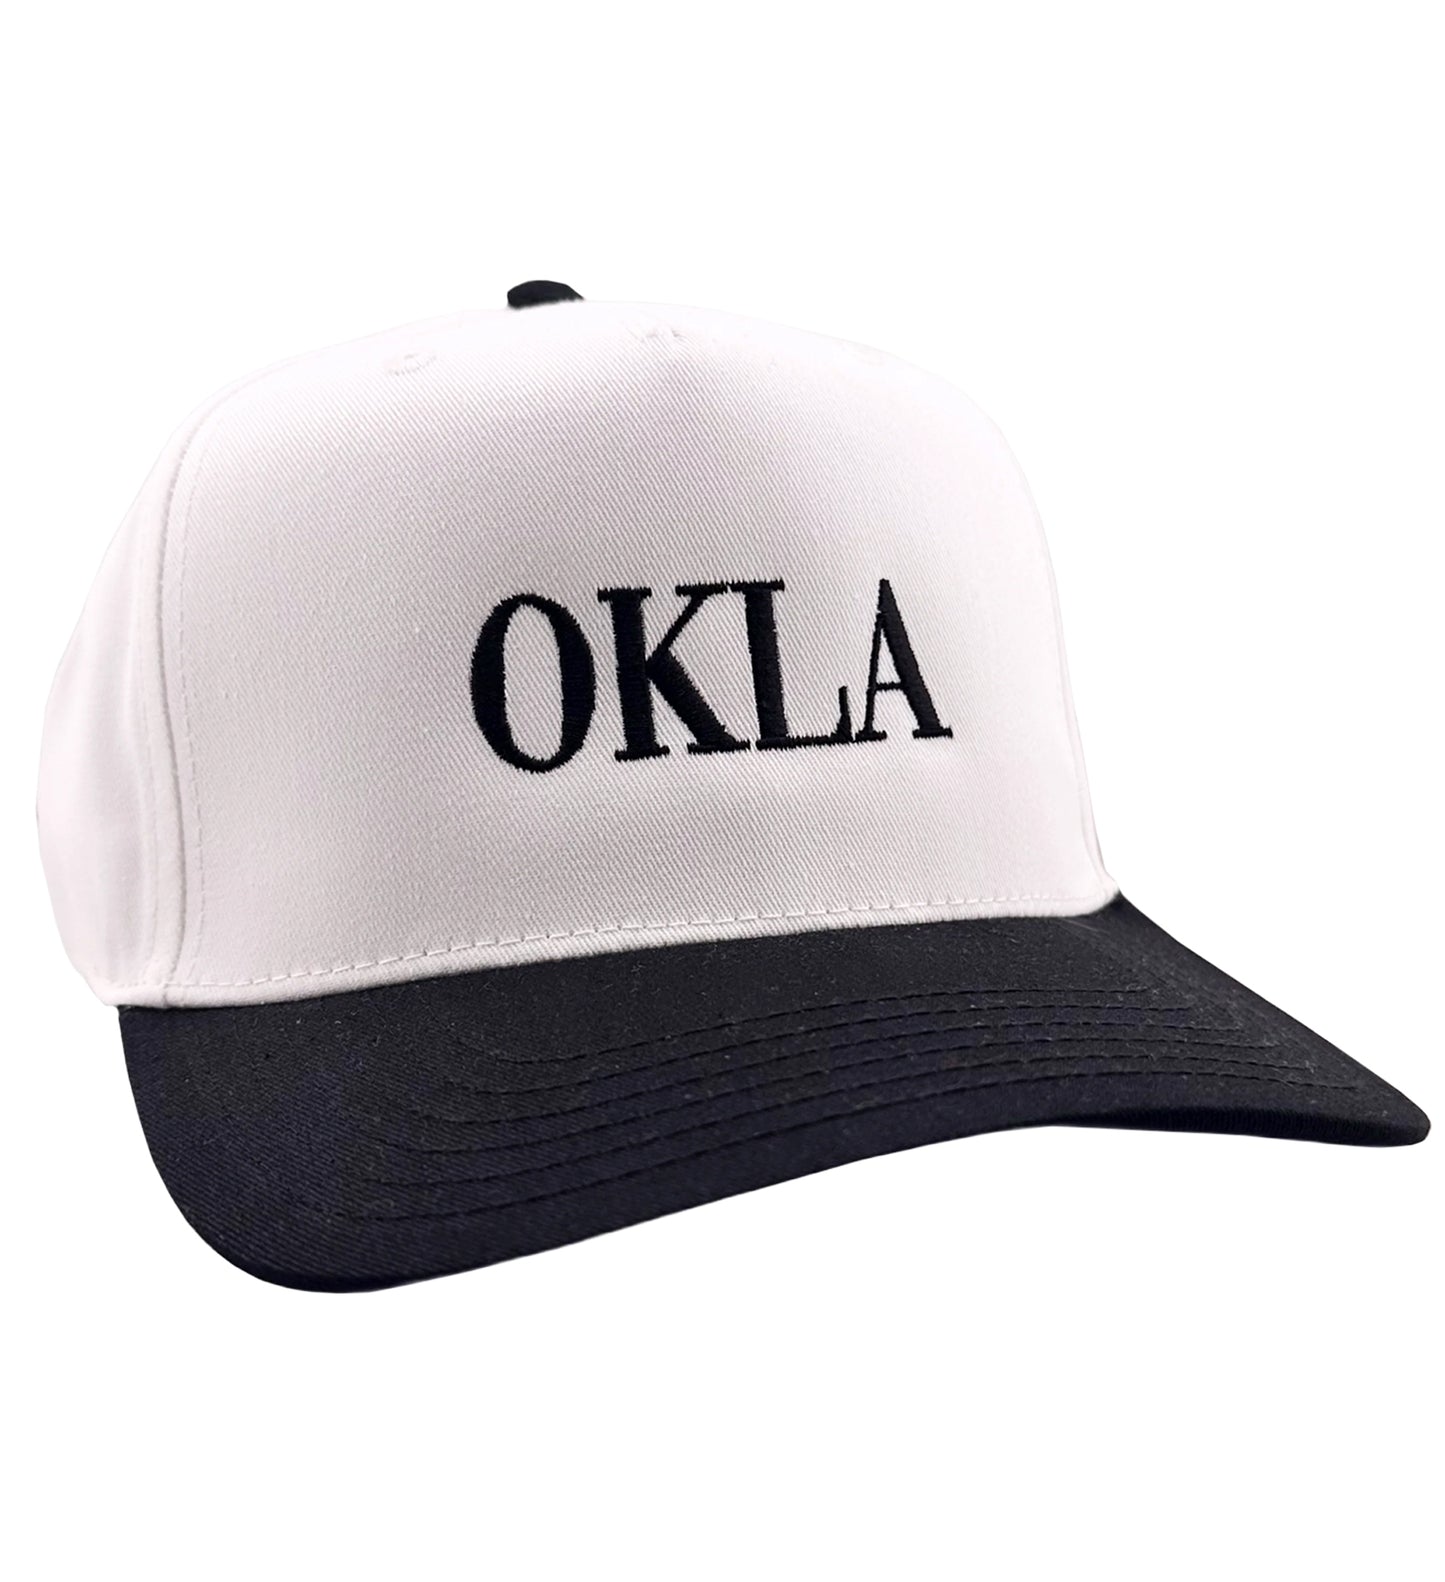 OKLA Two-Tone Hat